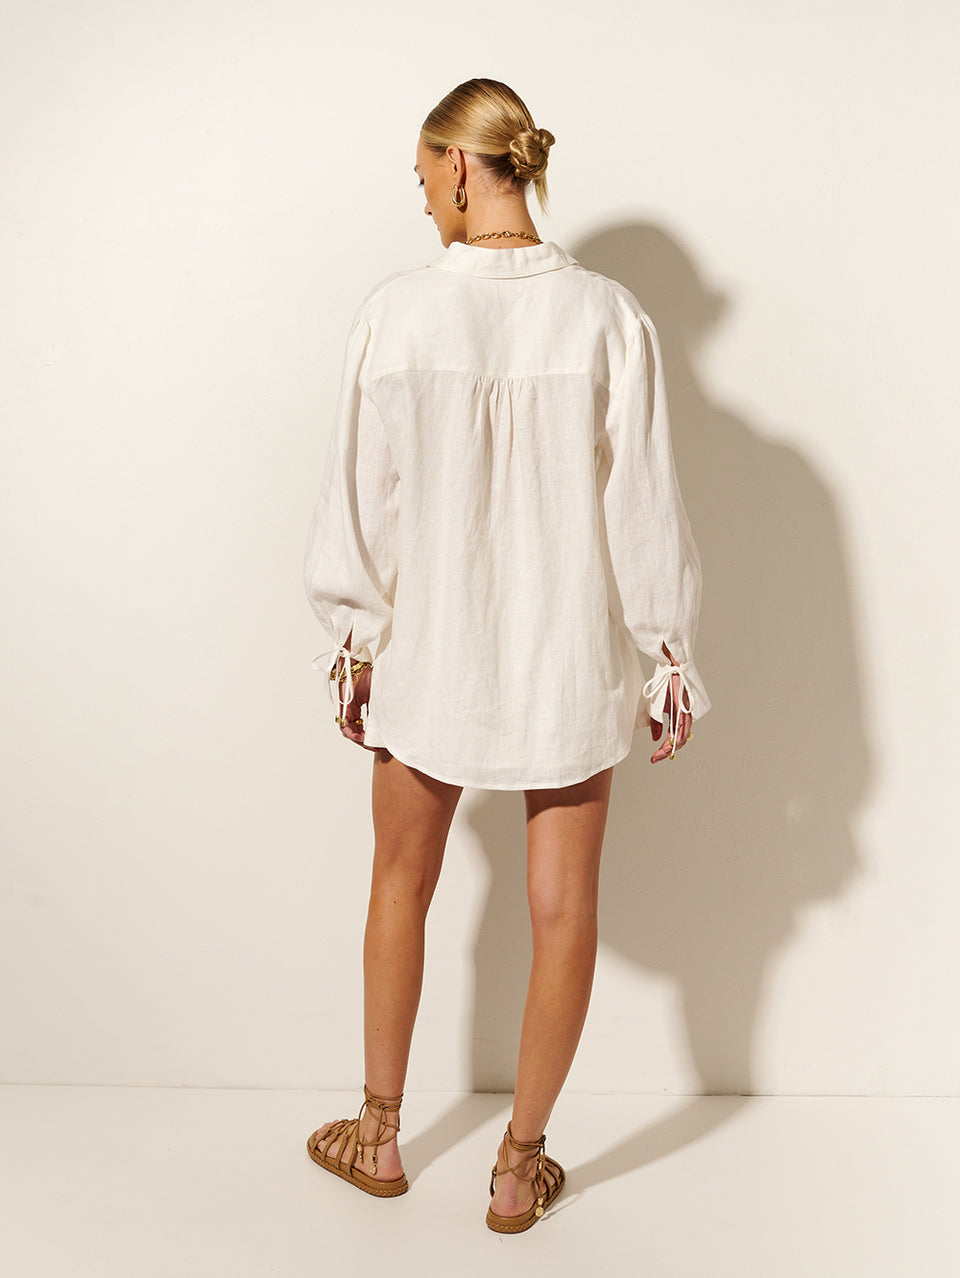 Jacana Short KIVARI | Model wears white linen shorts back view